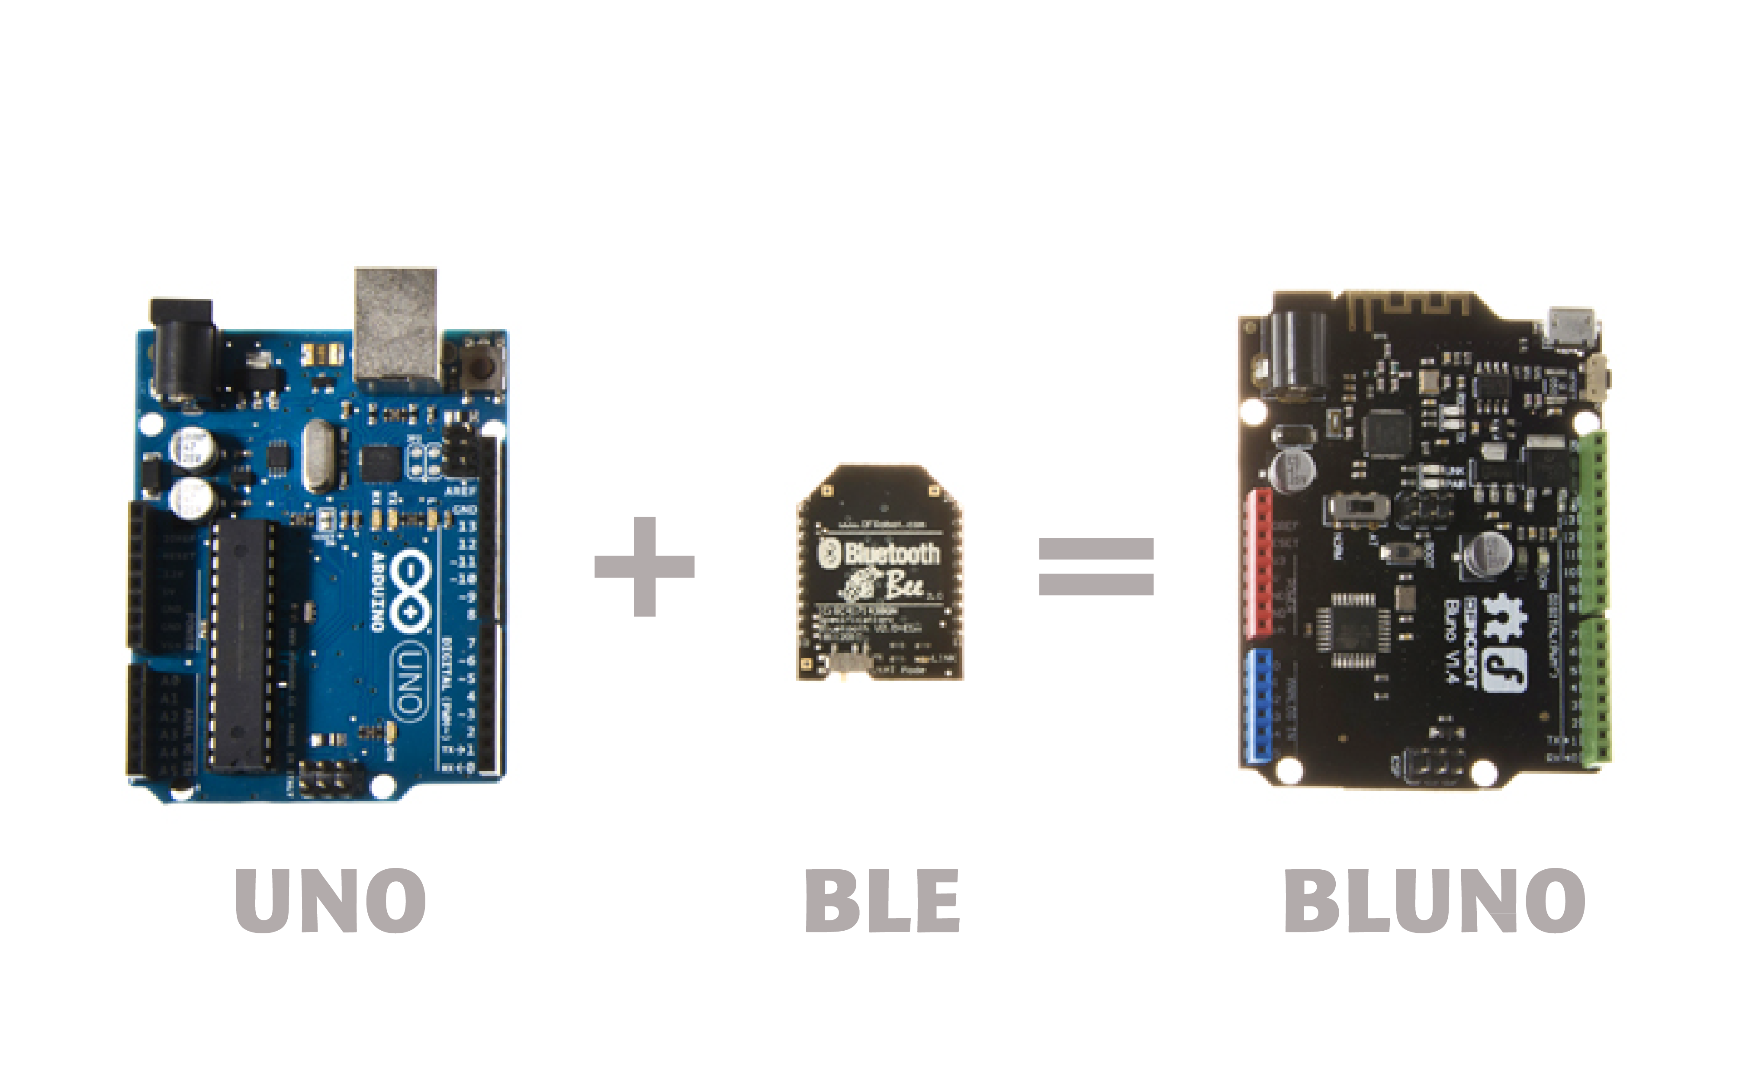  Bluno Mega 2560 - A Bluetooth 4.0 для Arduino ардуино